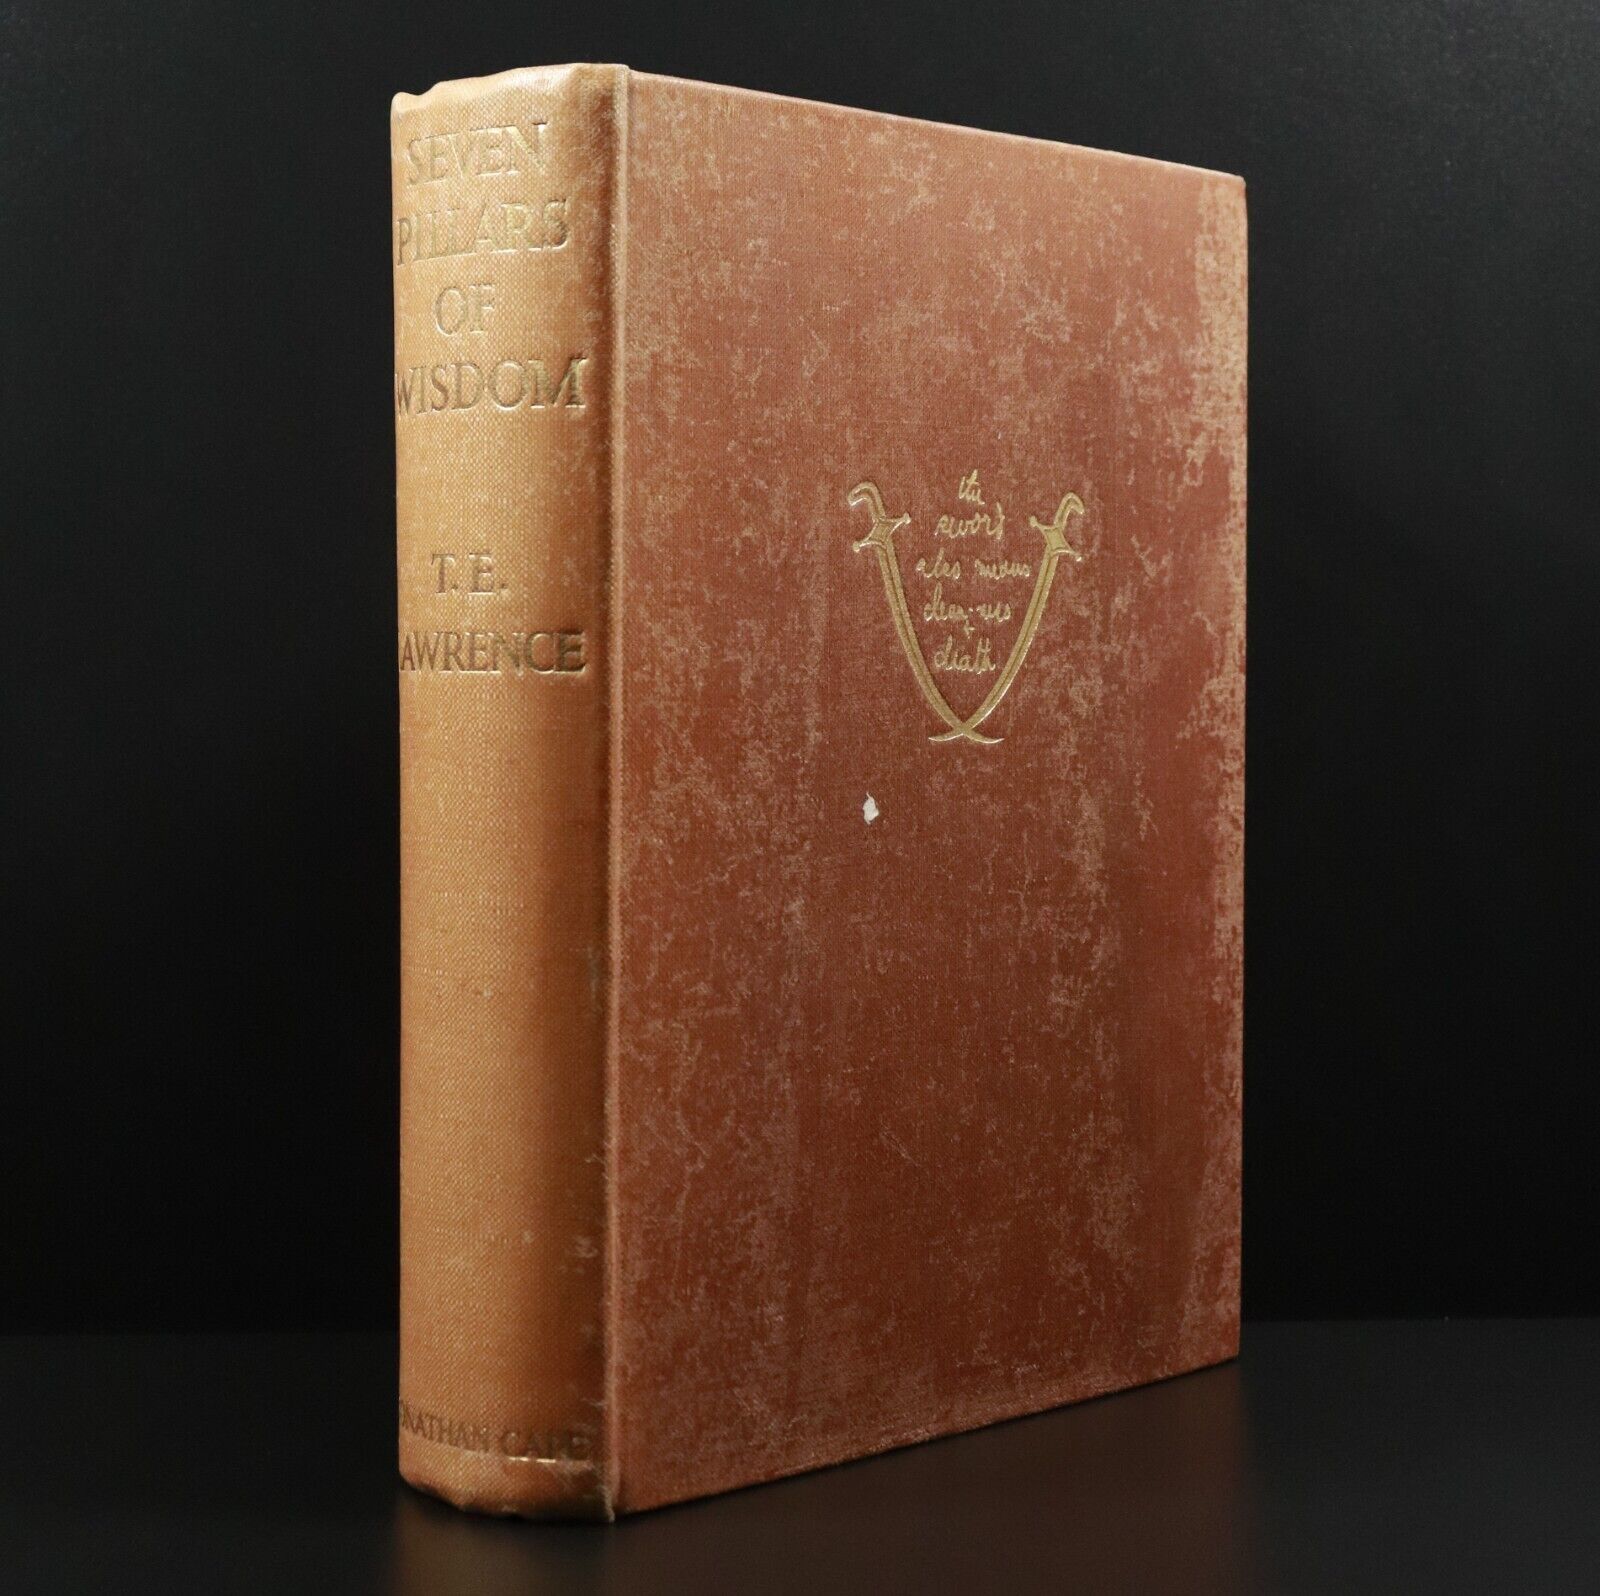 1935 Seven Pillars Of Wisdom by T.E Lawrence Antique Arabian History Book 1st Ed